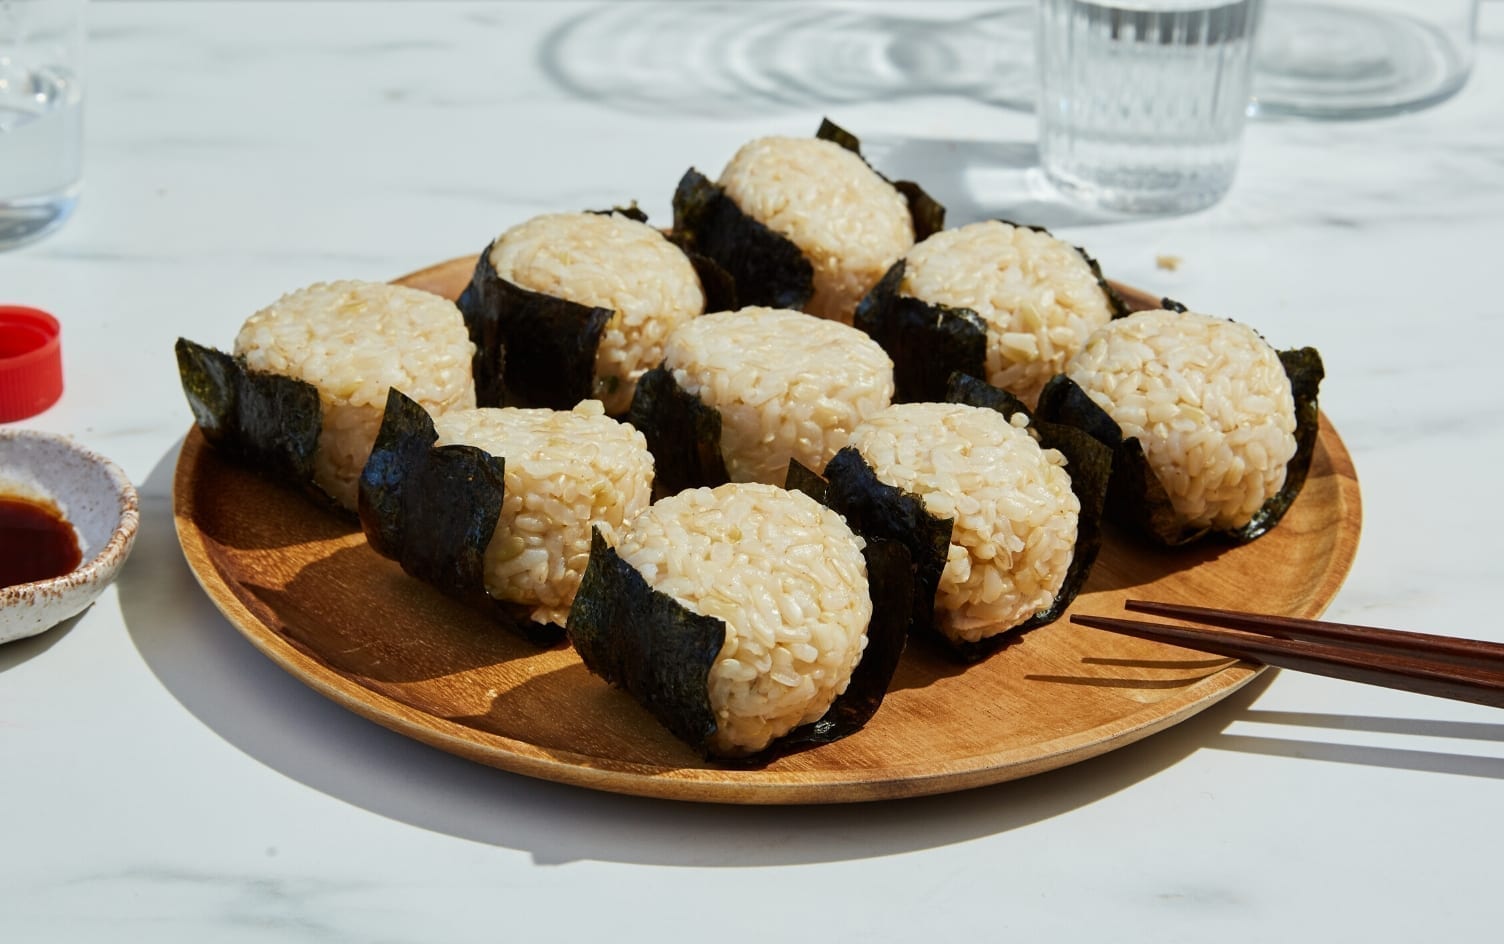 How to Make Tuna Mayo Onigiri (Japanese Rice Balls) - Couple Eats Food